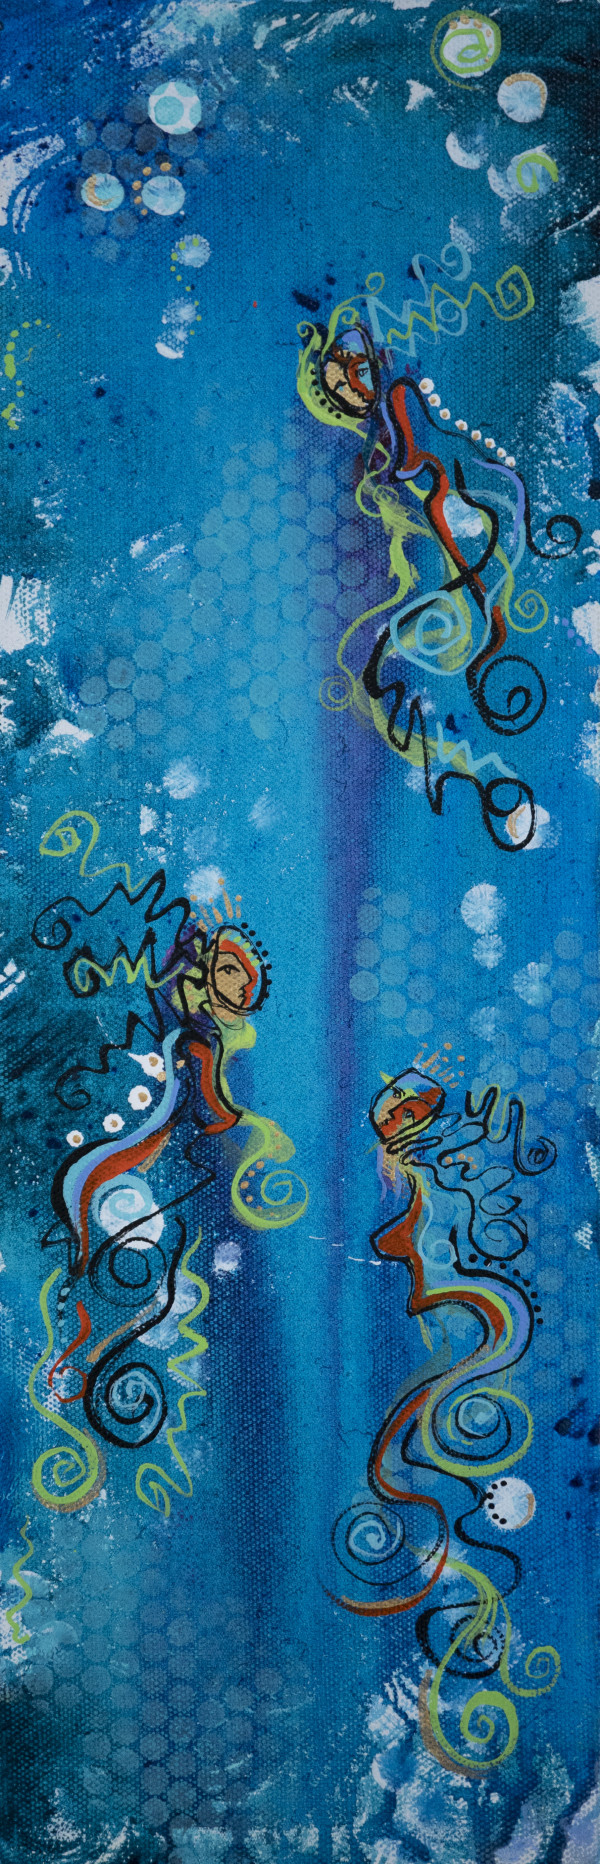 Floating (Little Mermaidens) by Evelyn Dufner